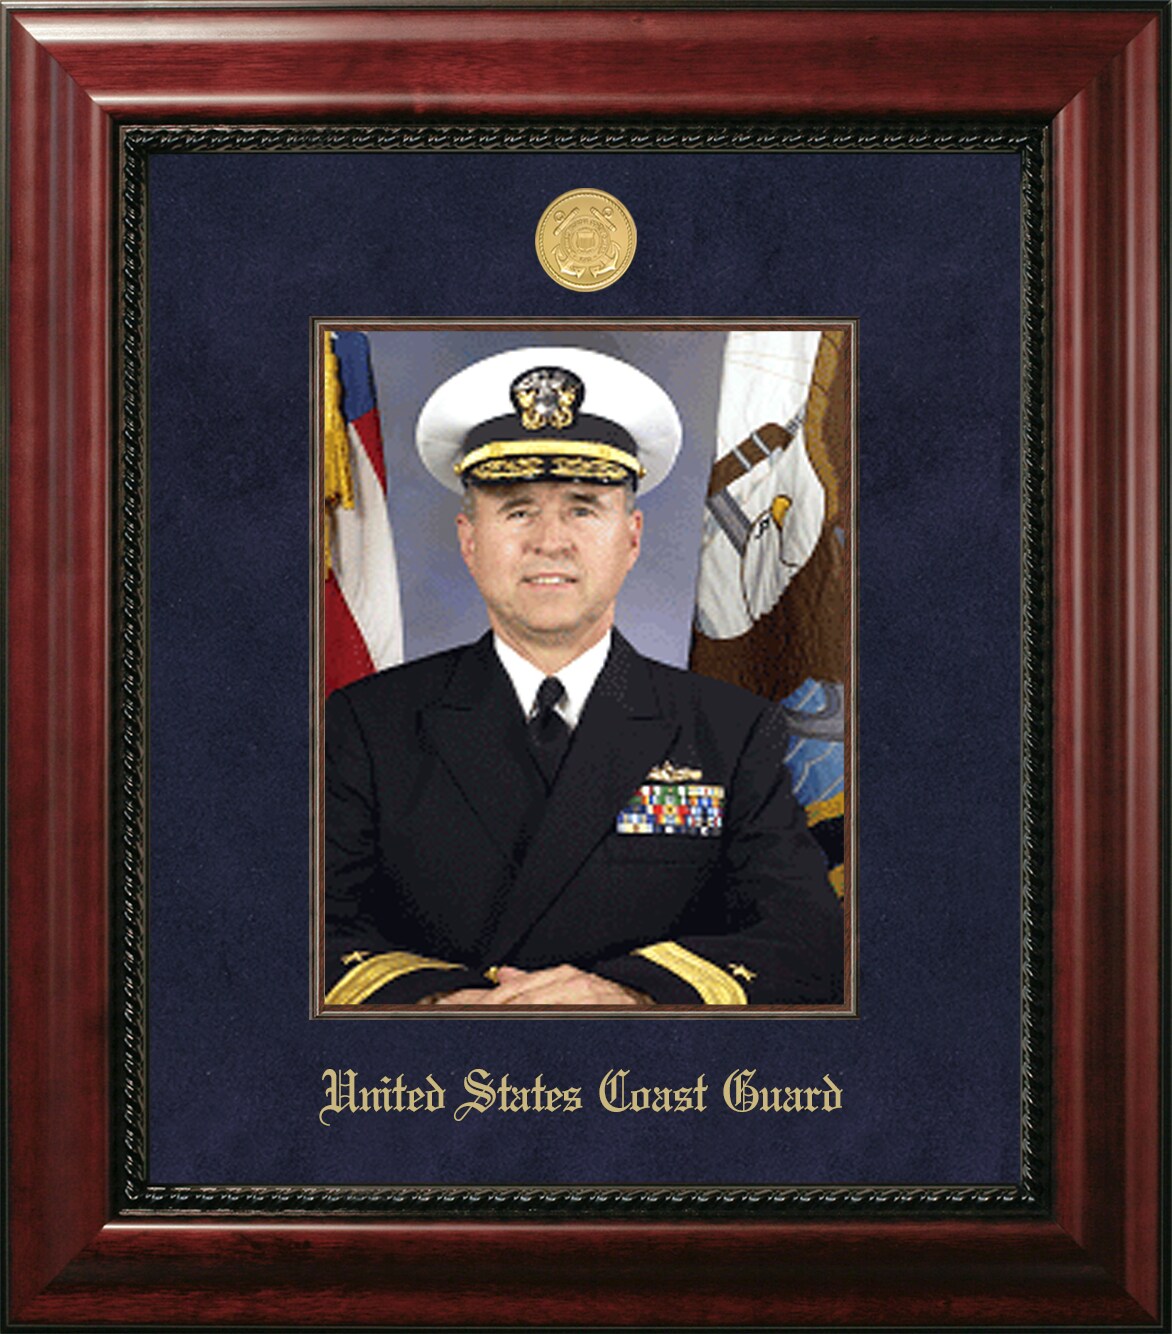 Patriot Frames Coast Guard 8x10 Portrait Executive Frame with Gold Medallion